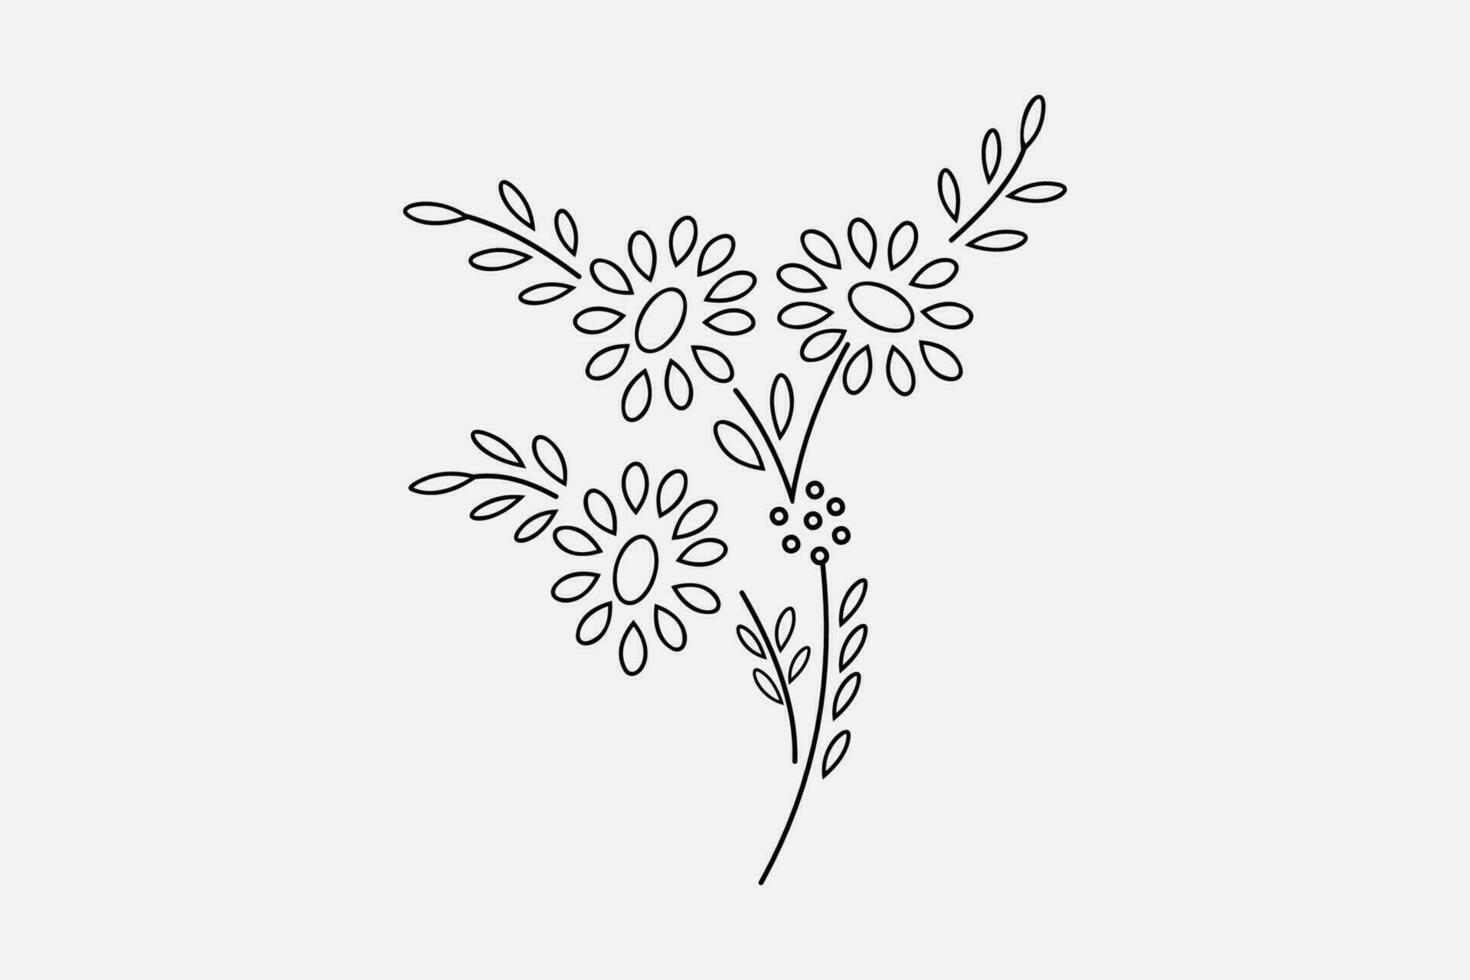 Simple Black Outline Hand Drawn Flower Design Elements vector